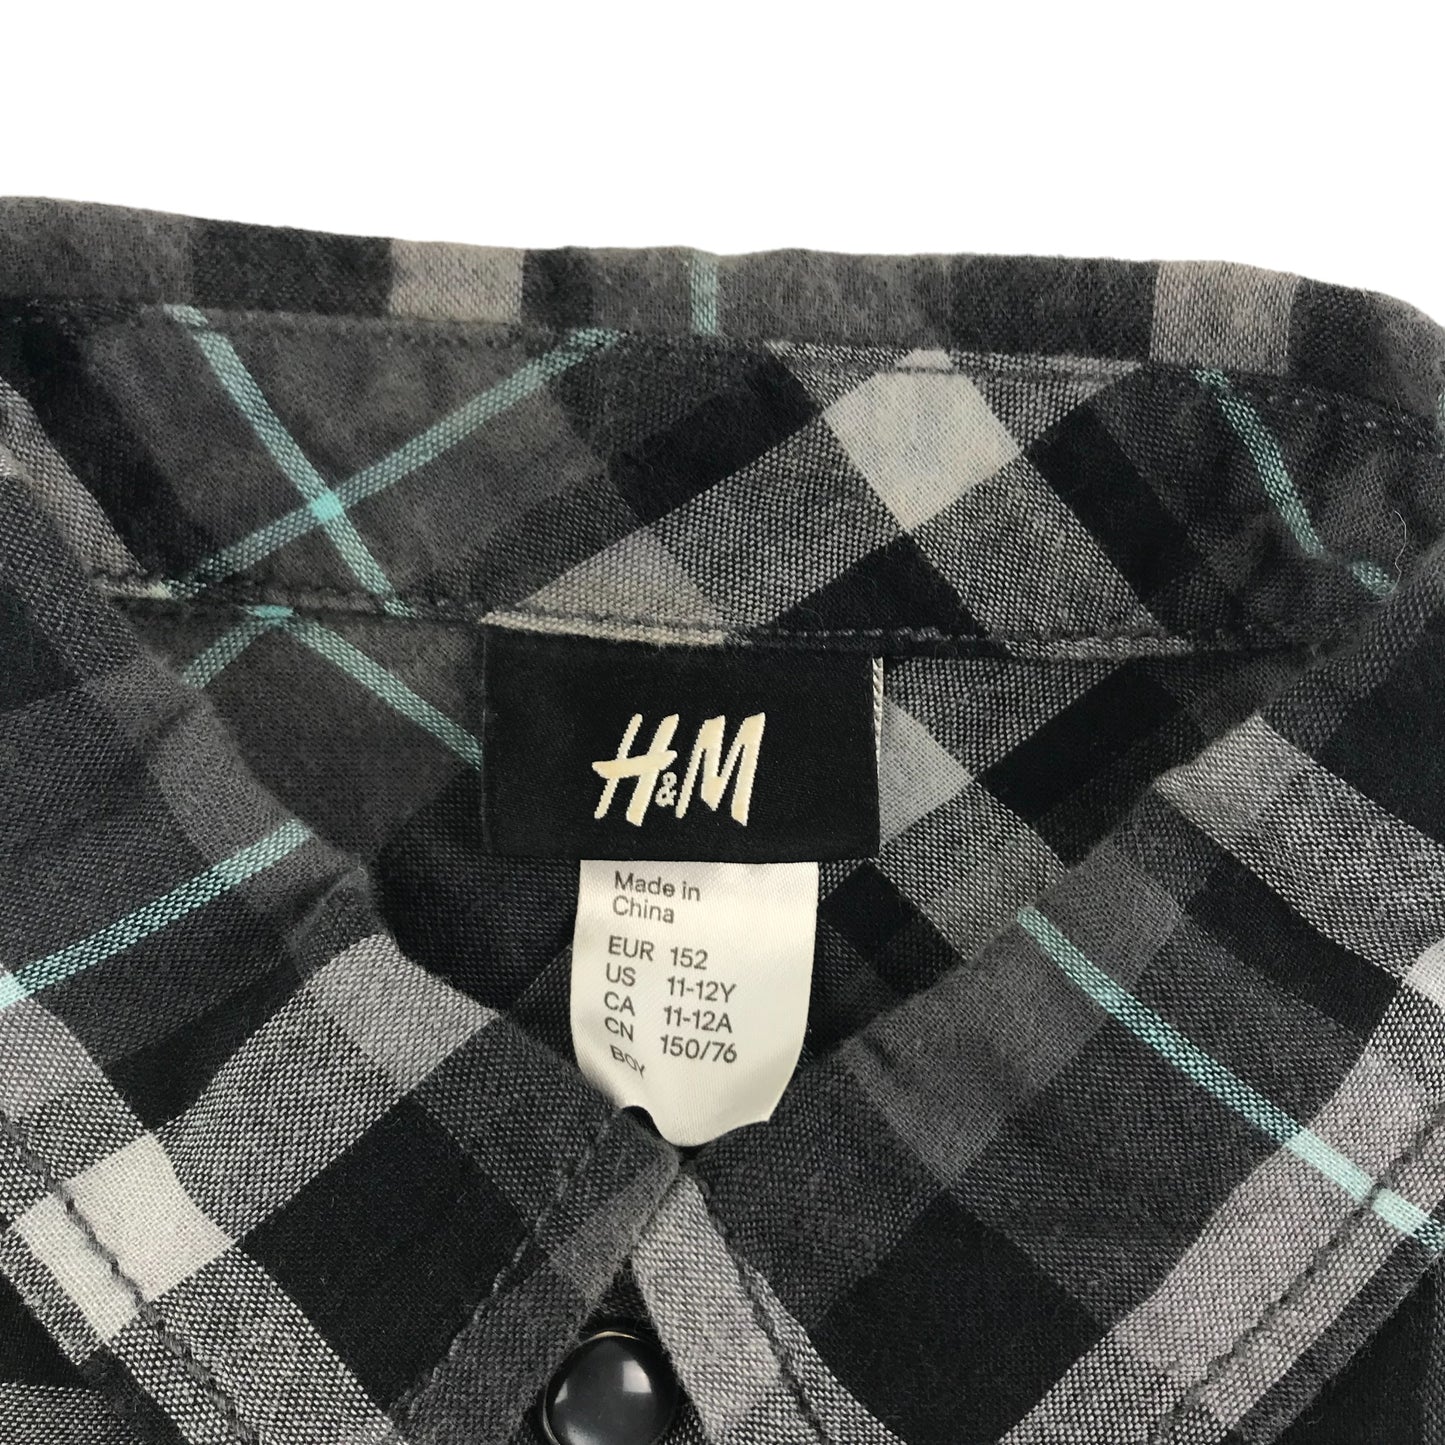 H&M Shirt Age 11 Grey Check Button Up Cotton